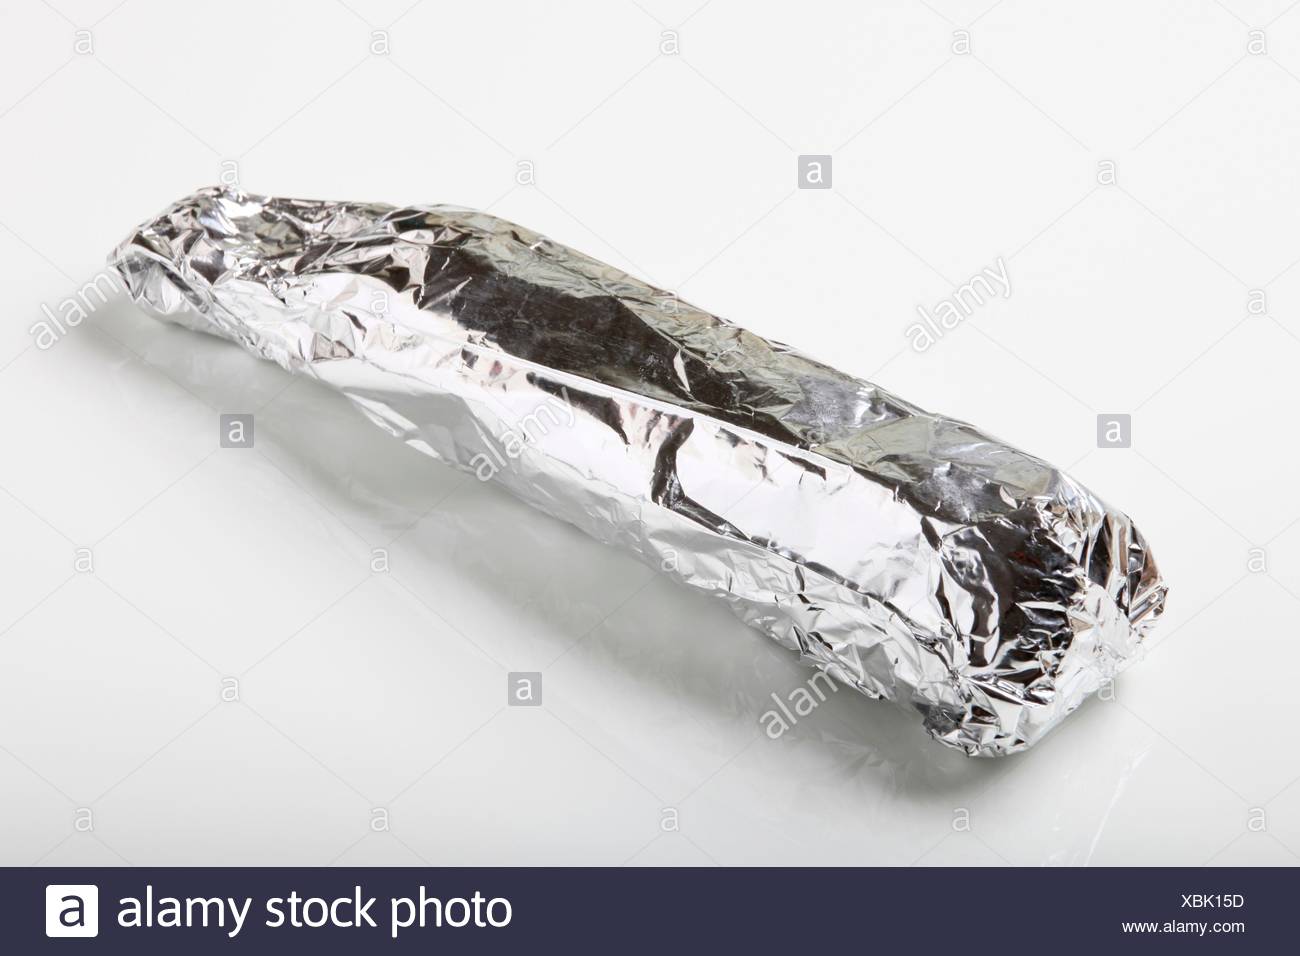 Raw Pork Tenderloin Wrapped In Aluminum Foil Stock Photo Alamy